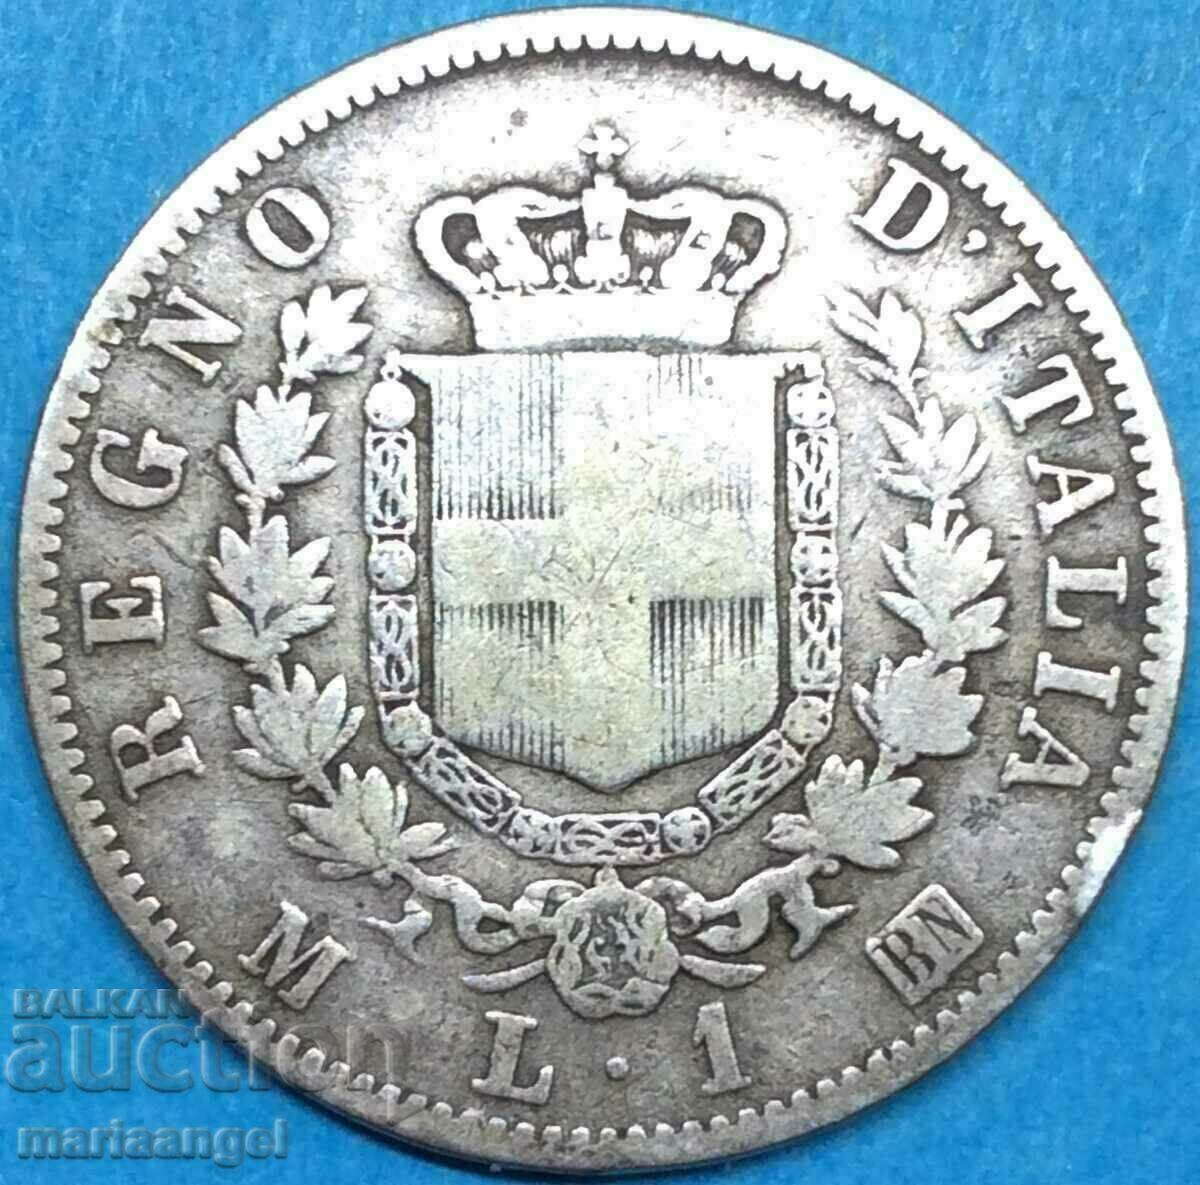 1 lira 1863 Italy M-Milan (Birmingham) silver